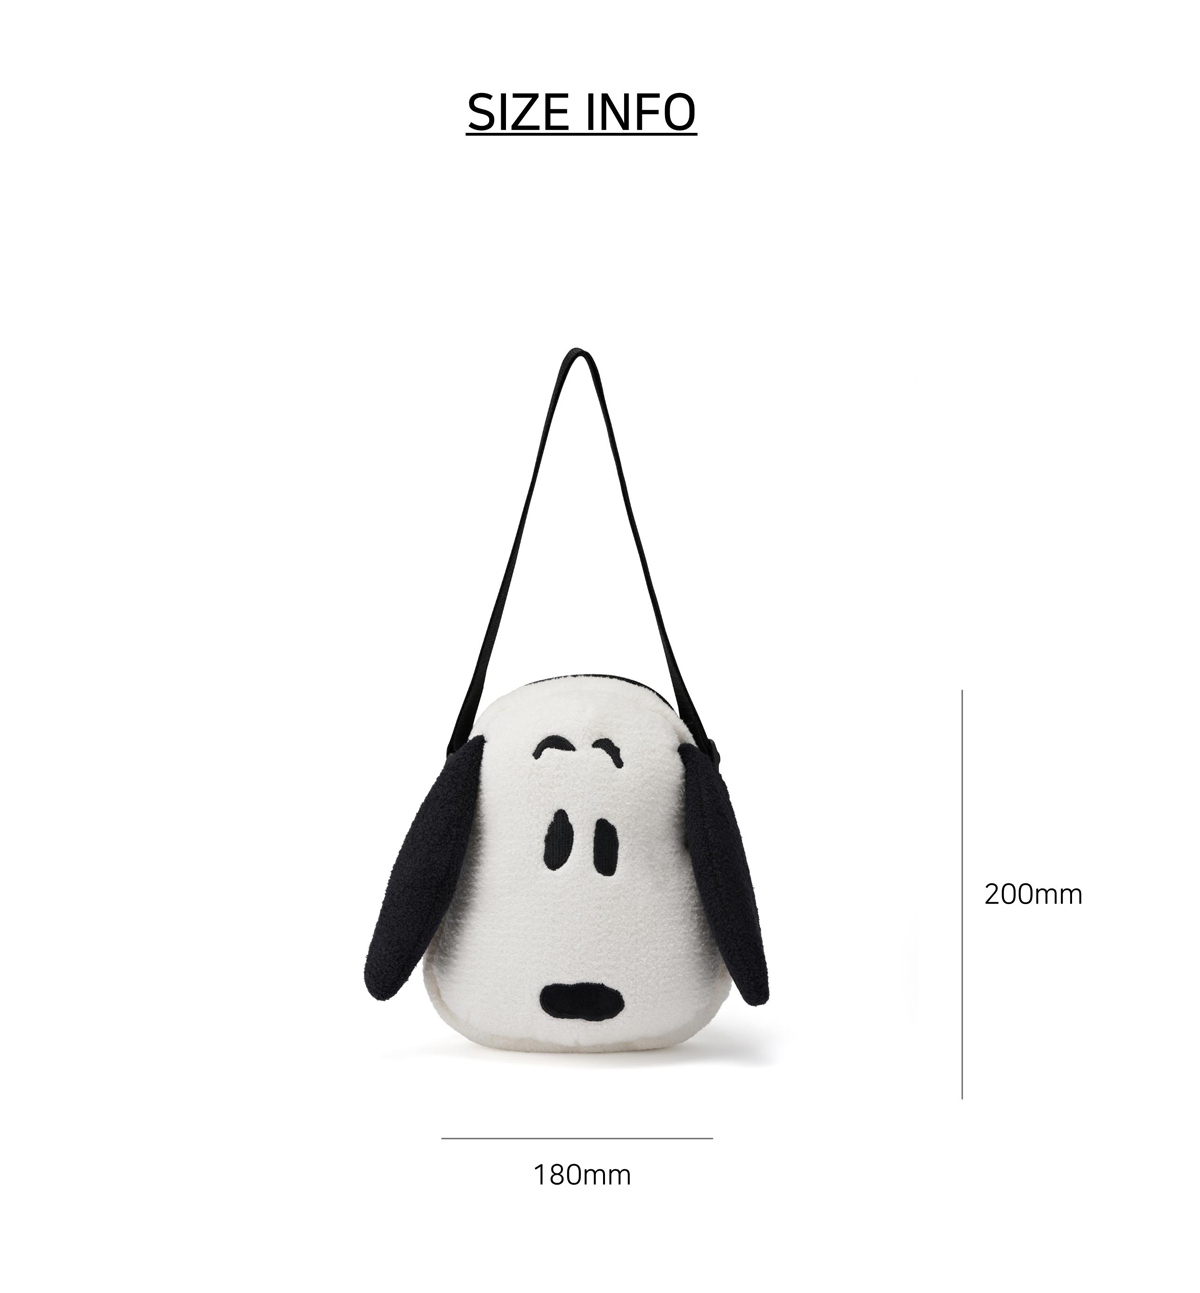 Peanuts Snoopy Cross Body Bag